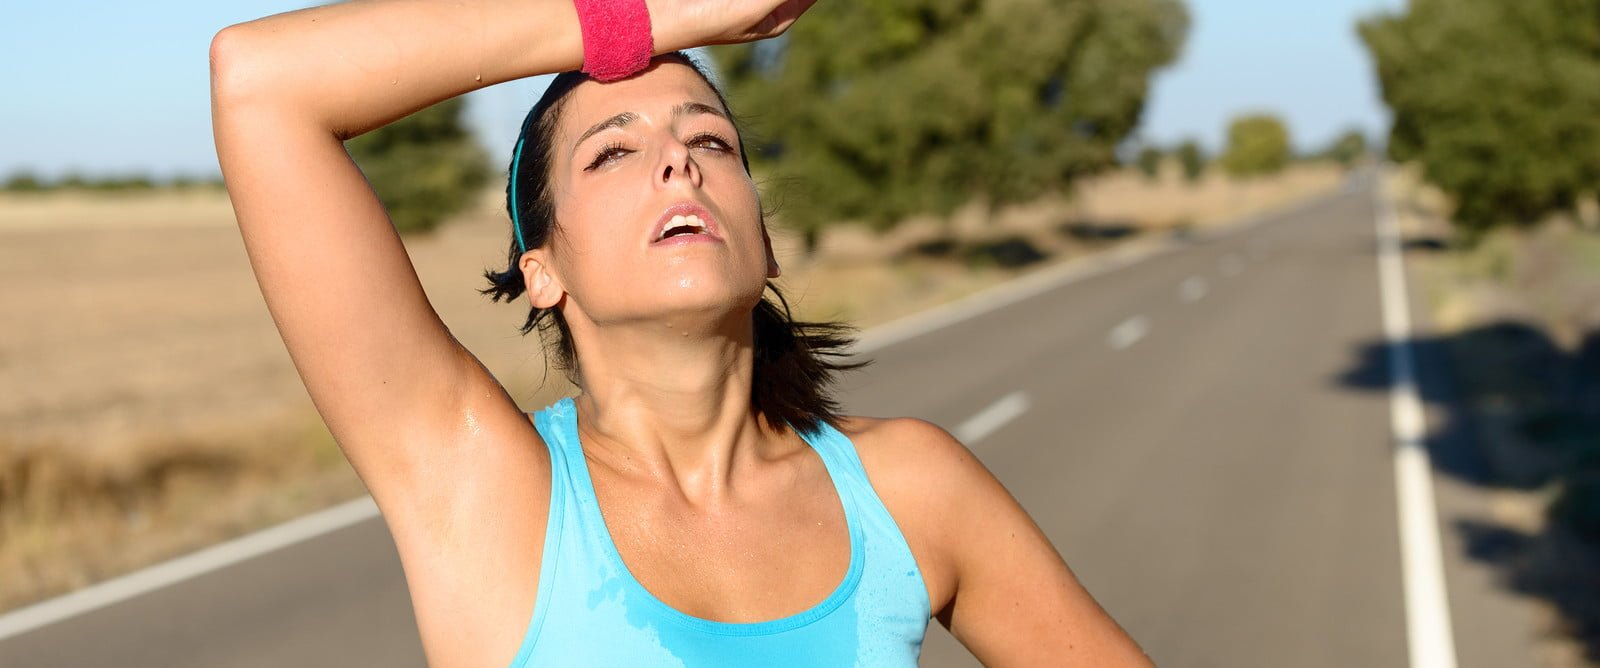 Bigstock Tired Woman Sweating After Run 52155052 1 E1440052030326 مجلة نقطة العلمية